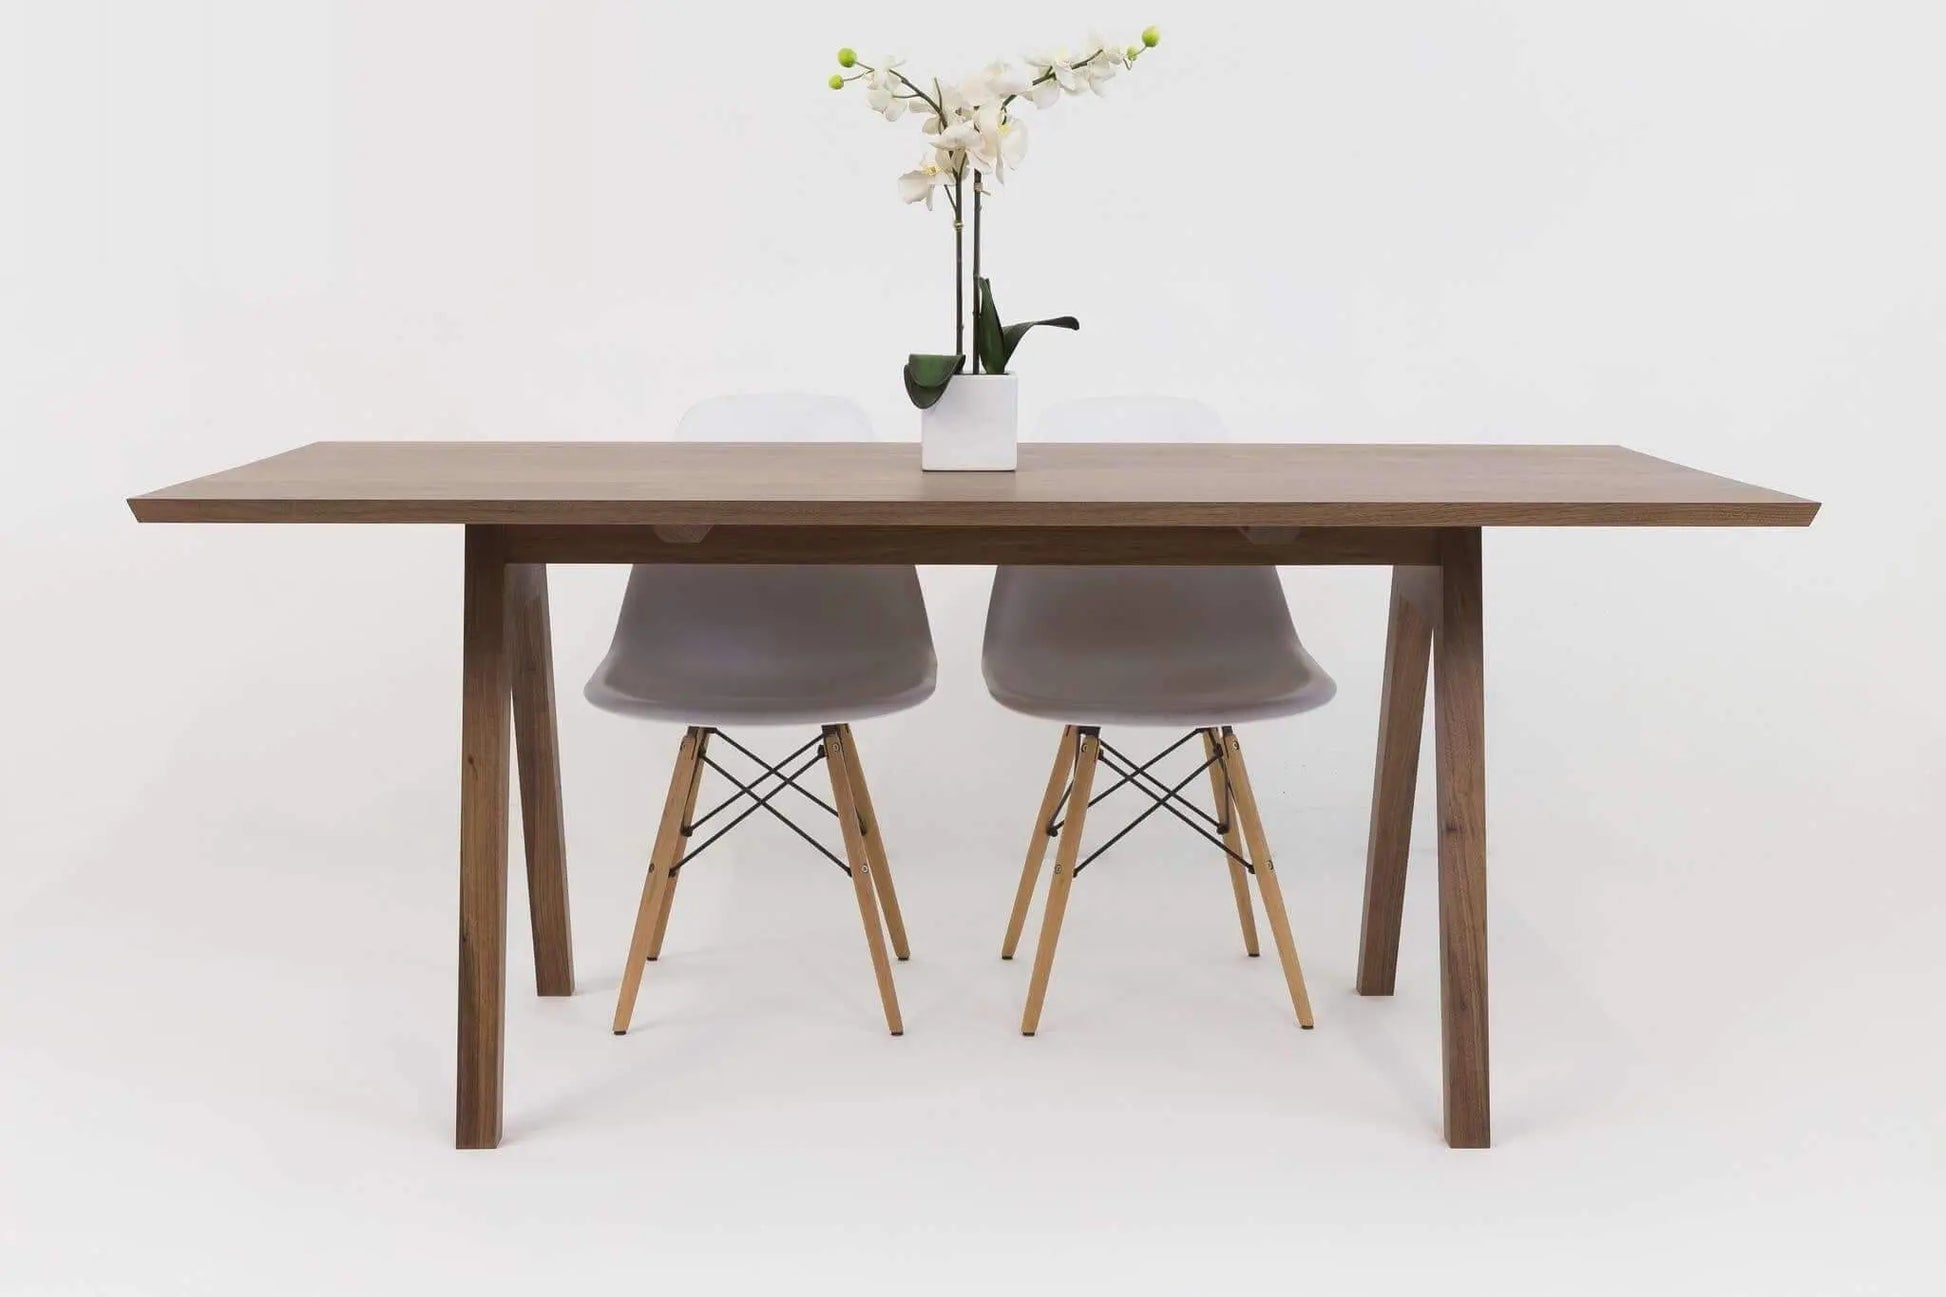 Sputnik Scandinavian Modern Dining Table with a focus on its sleek lines